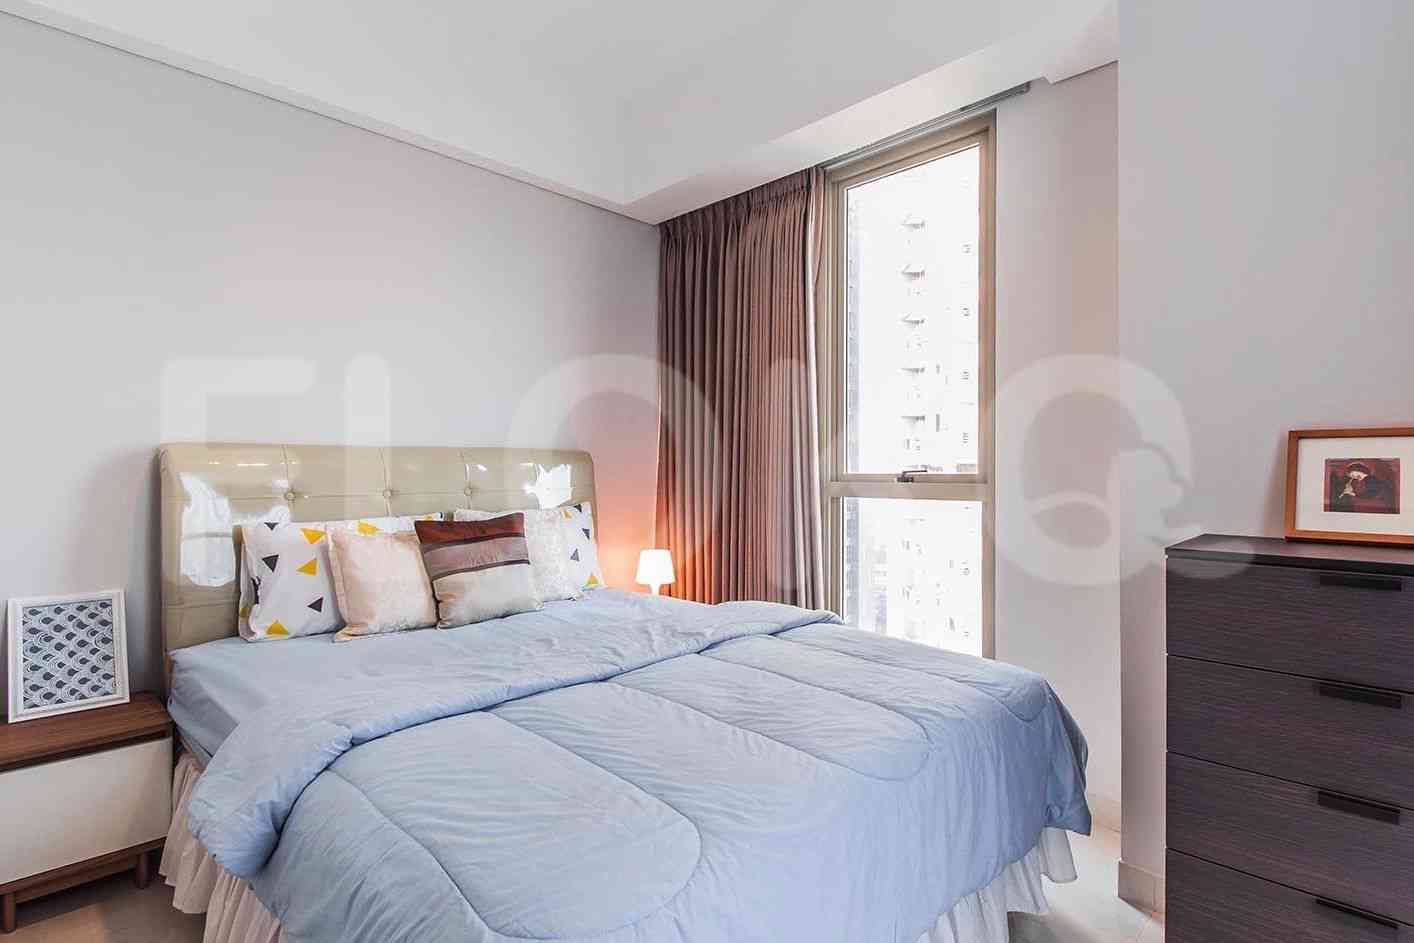 2 Bedroom on 29th Floor for Rent in Taman Anggrek Residence - fta112 1